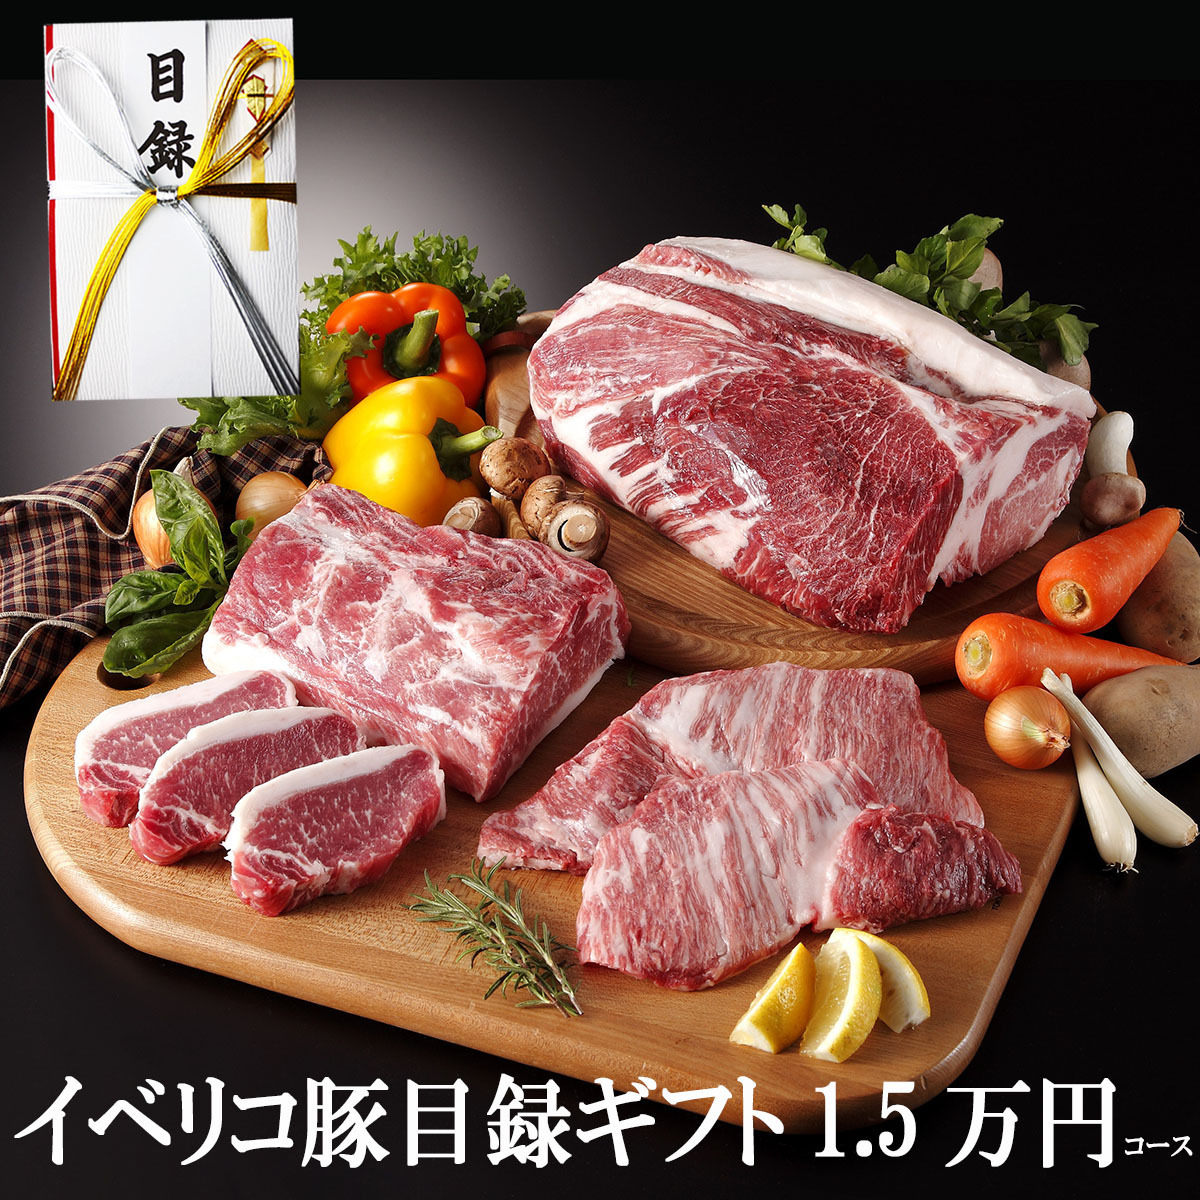 Iberico Pork Index Lift 15000 иен набор с панелями конкурса гольфа Meat Premium Luxury